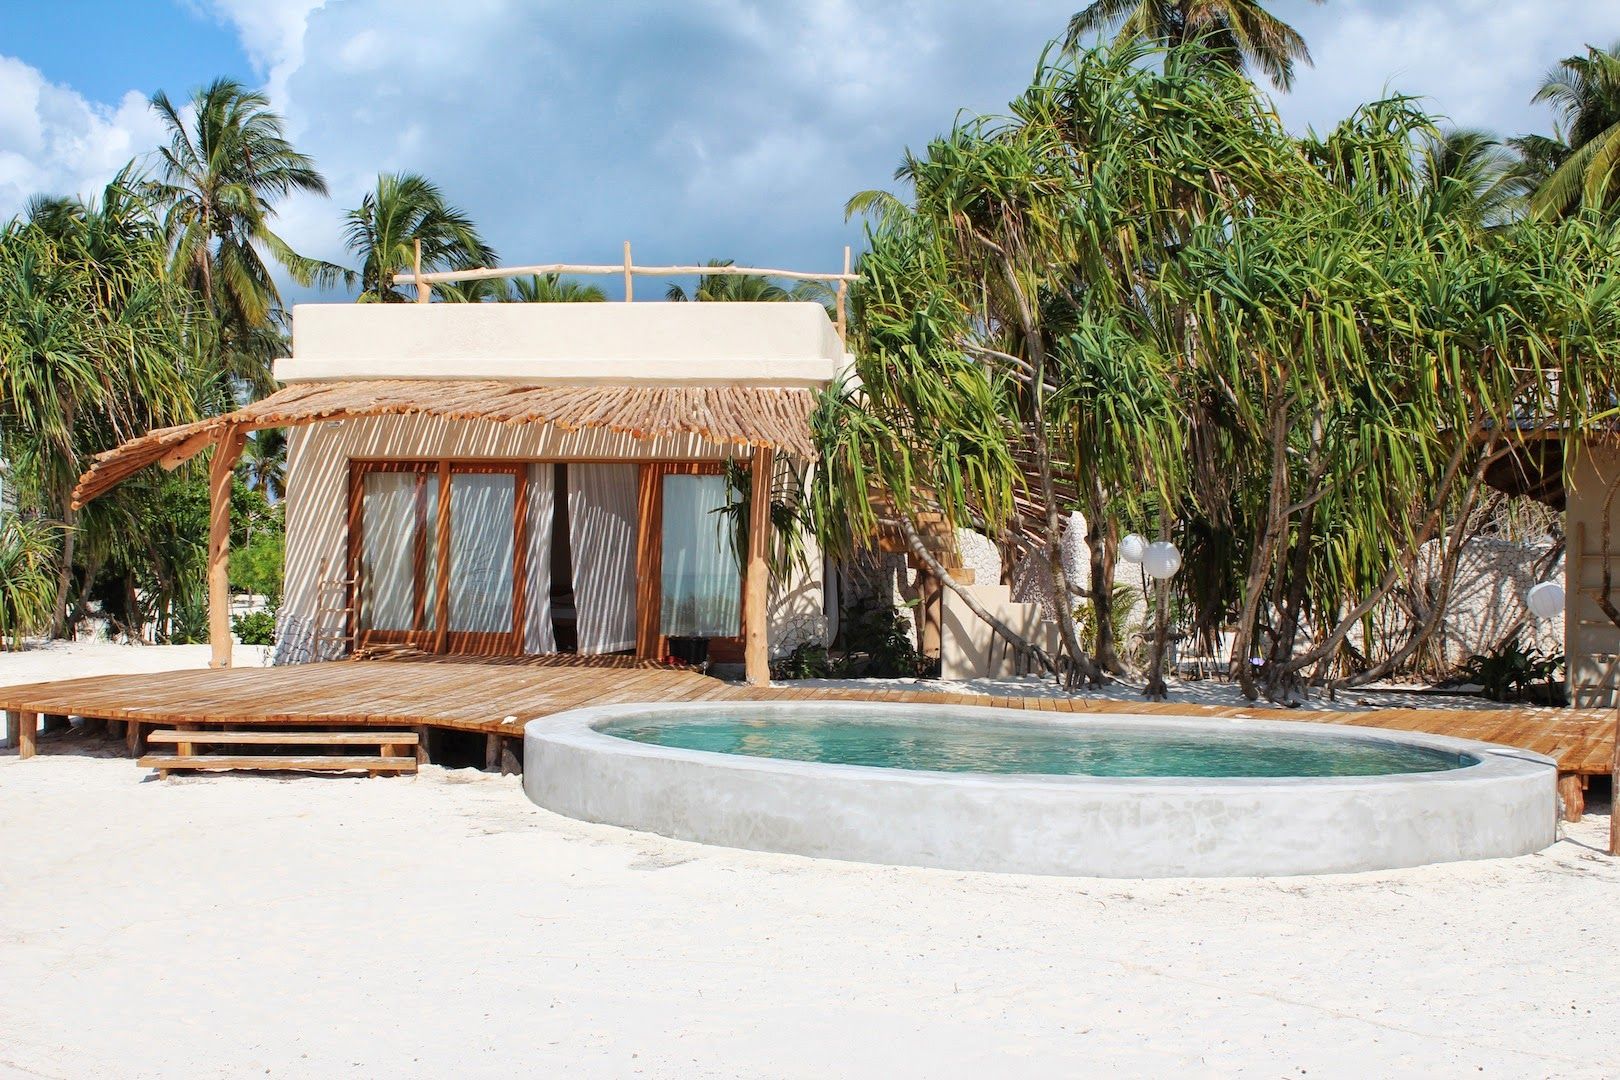 The grounds of White Sands Luxury Villas in Zanzibar